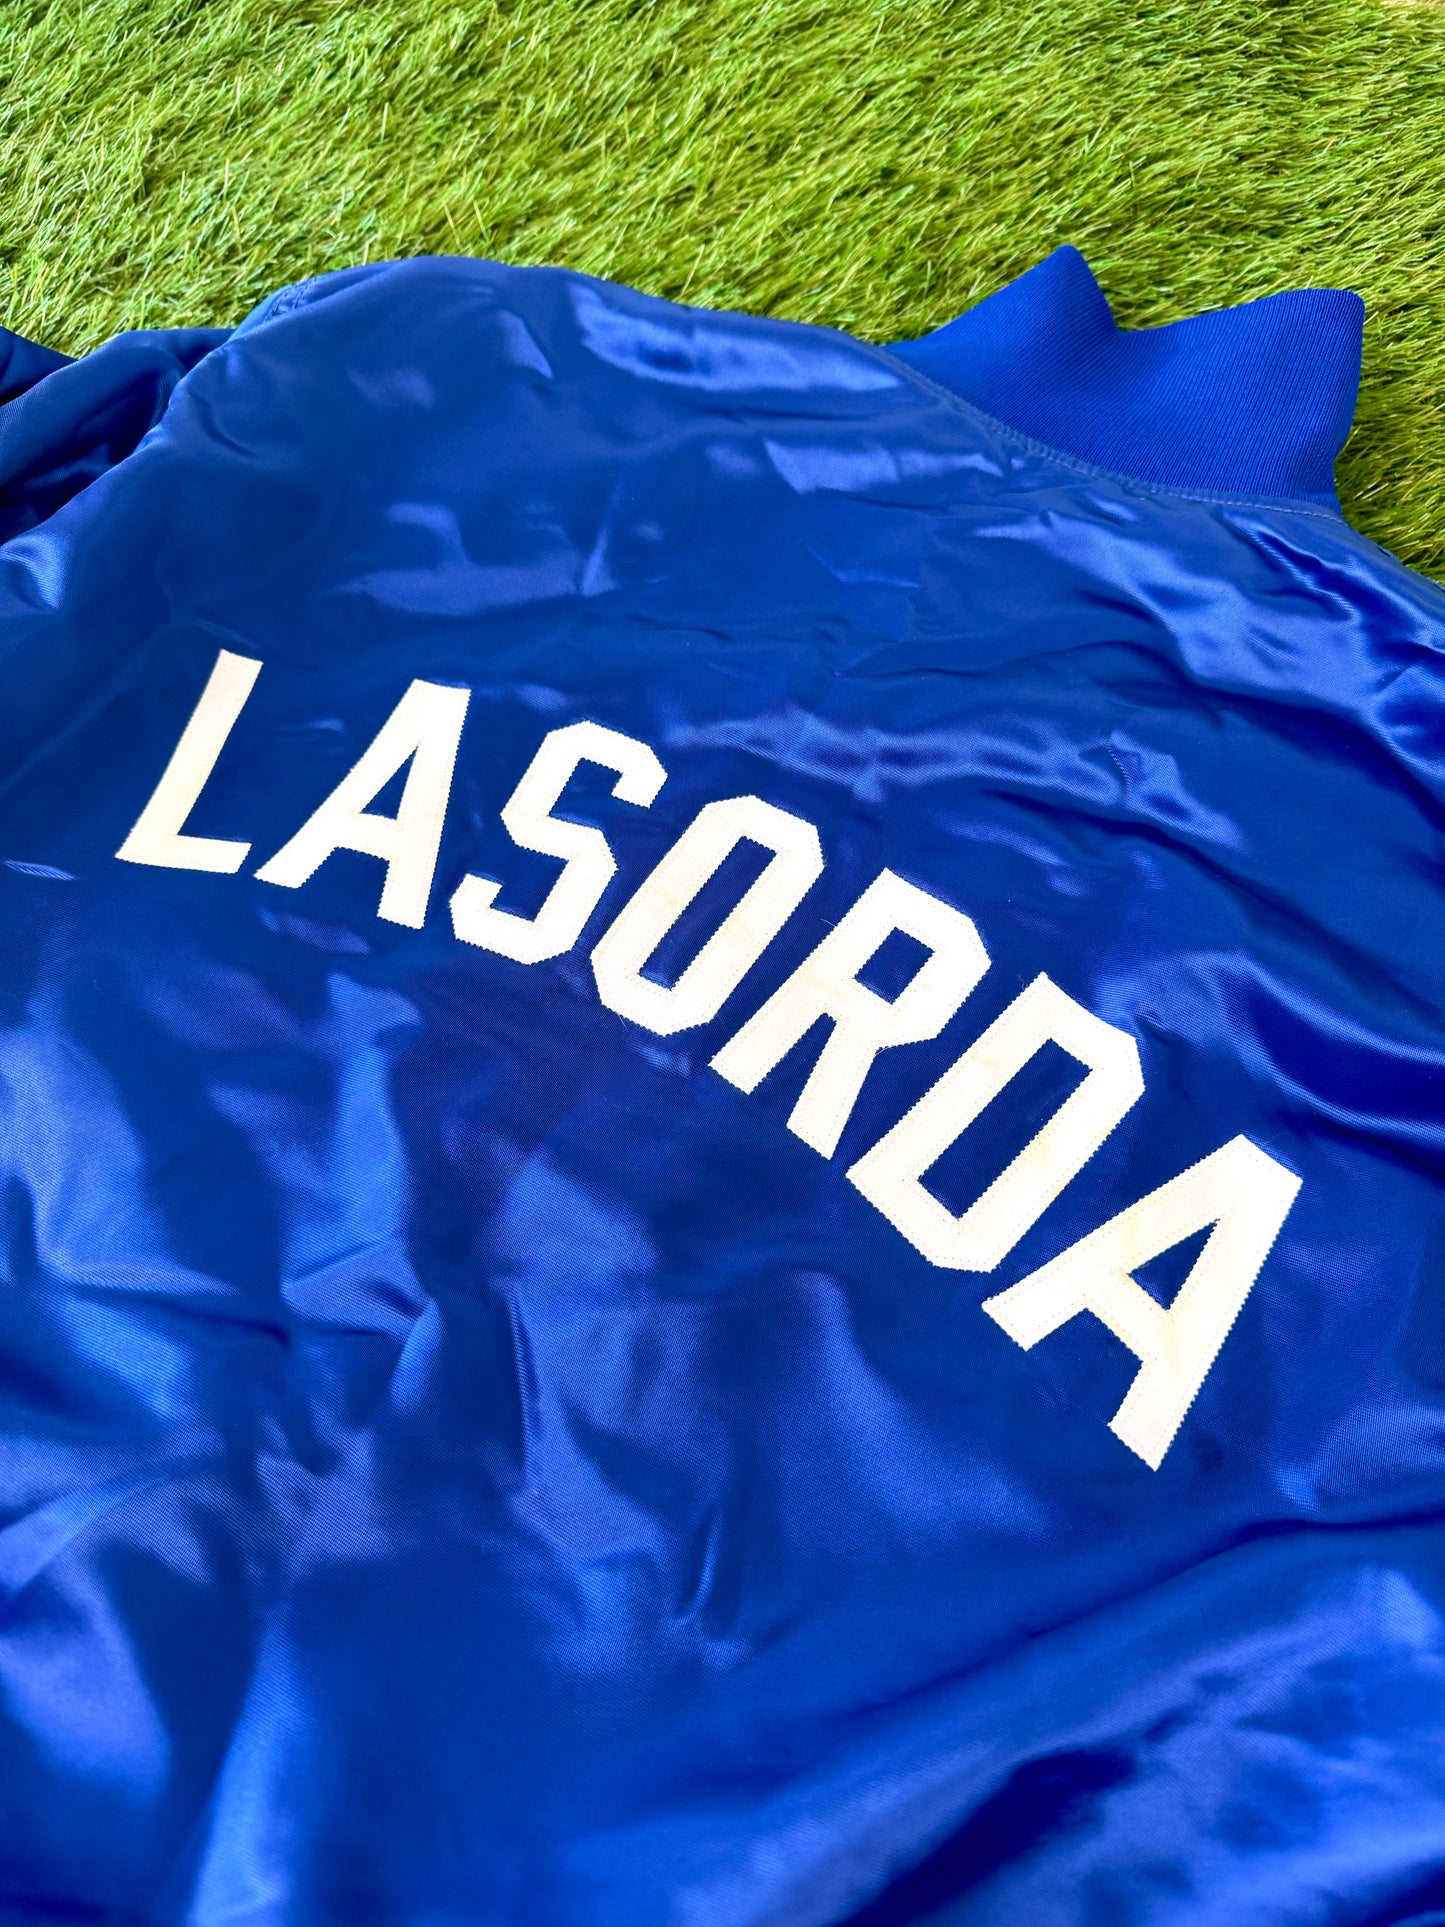 Los Angeles Dodgers Late 70s Tommy Lasorda Game Worn (Custom?) Jacket (42/Large)